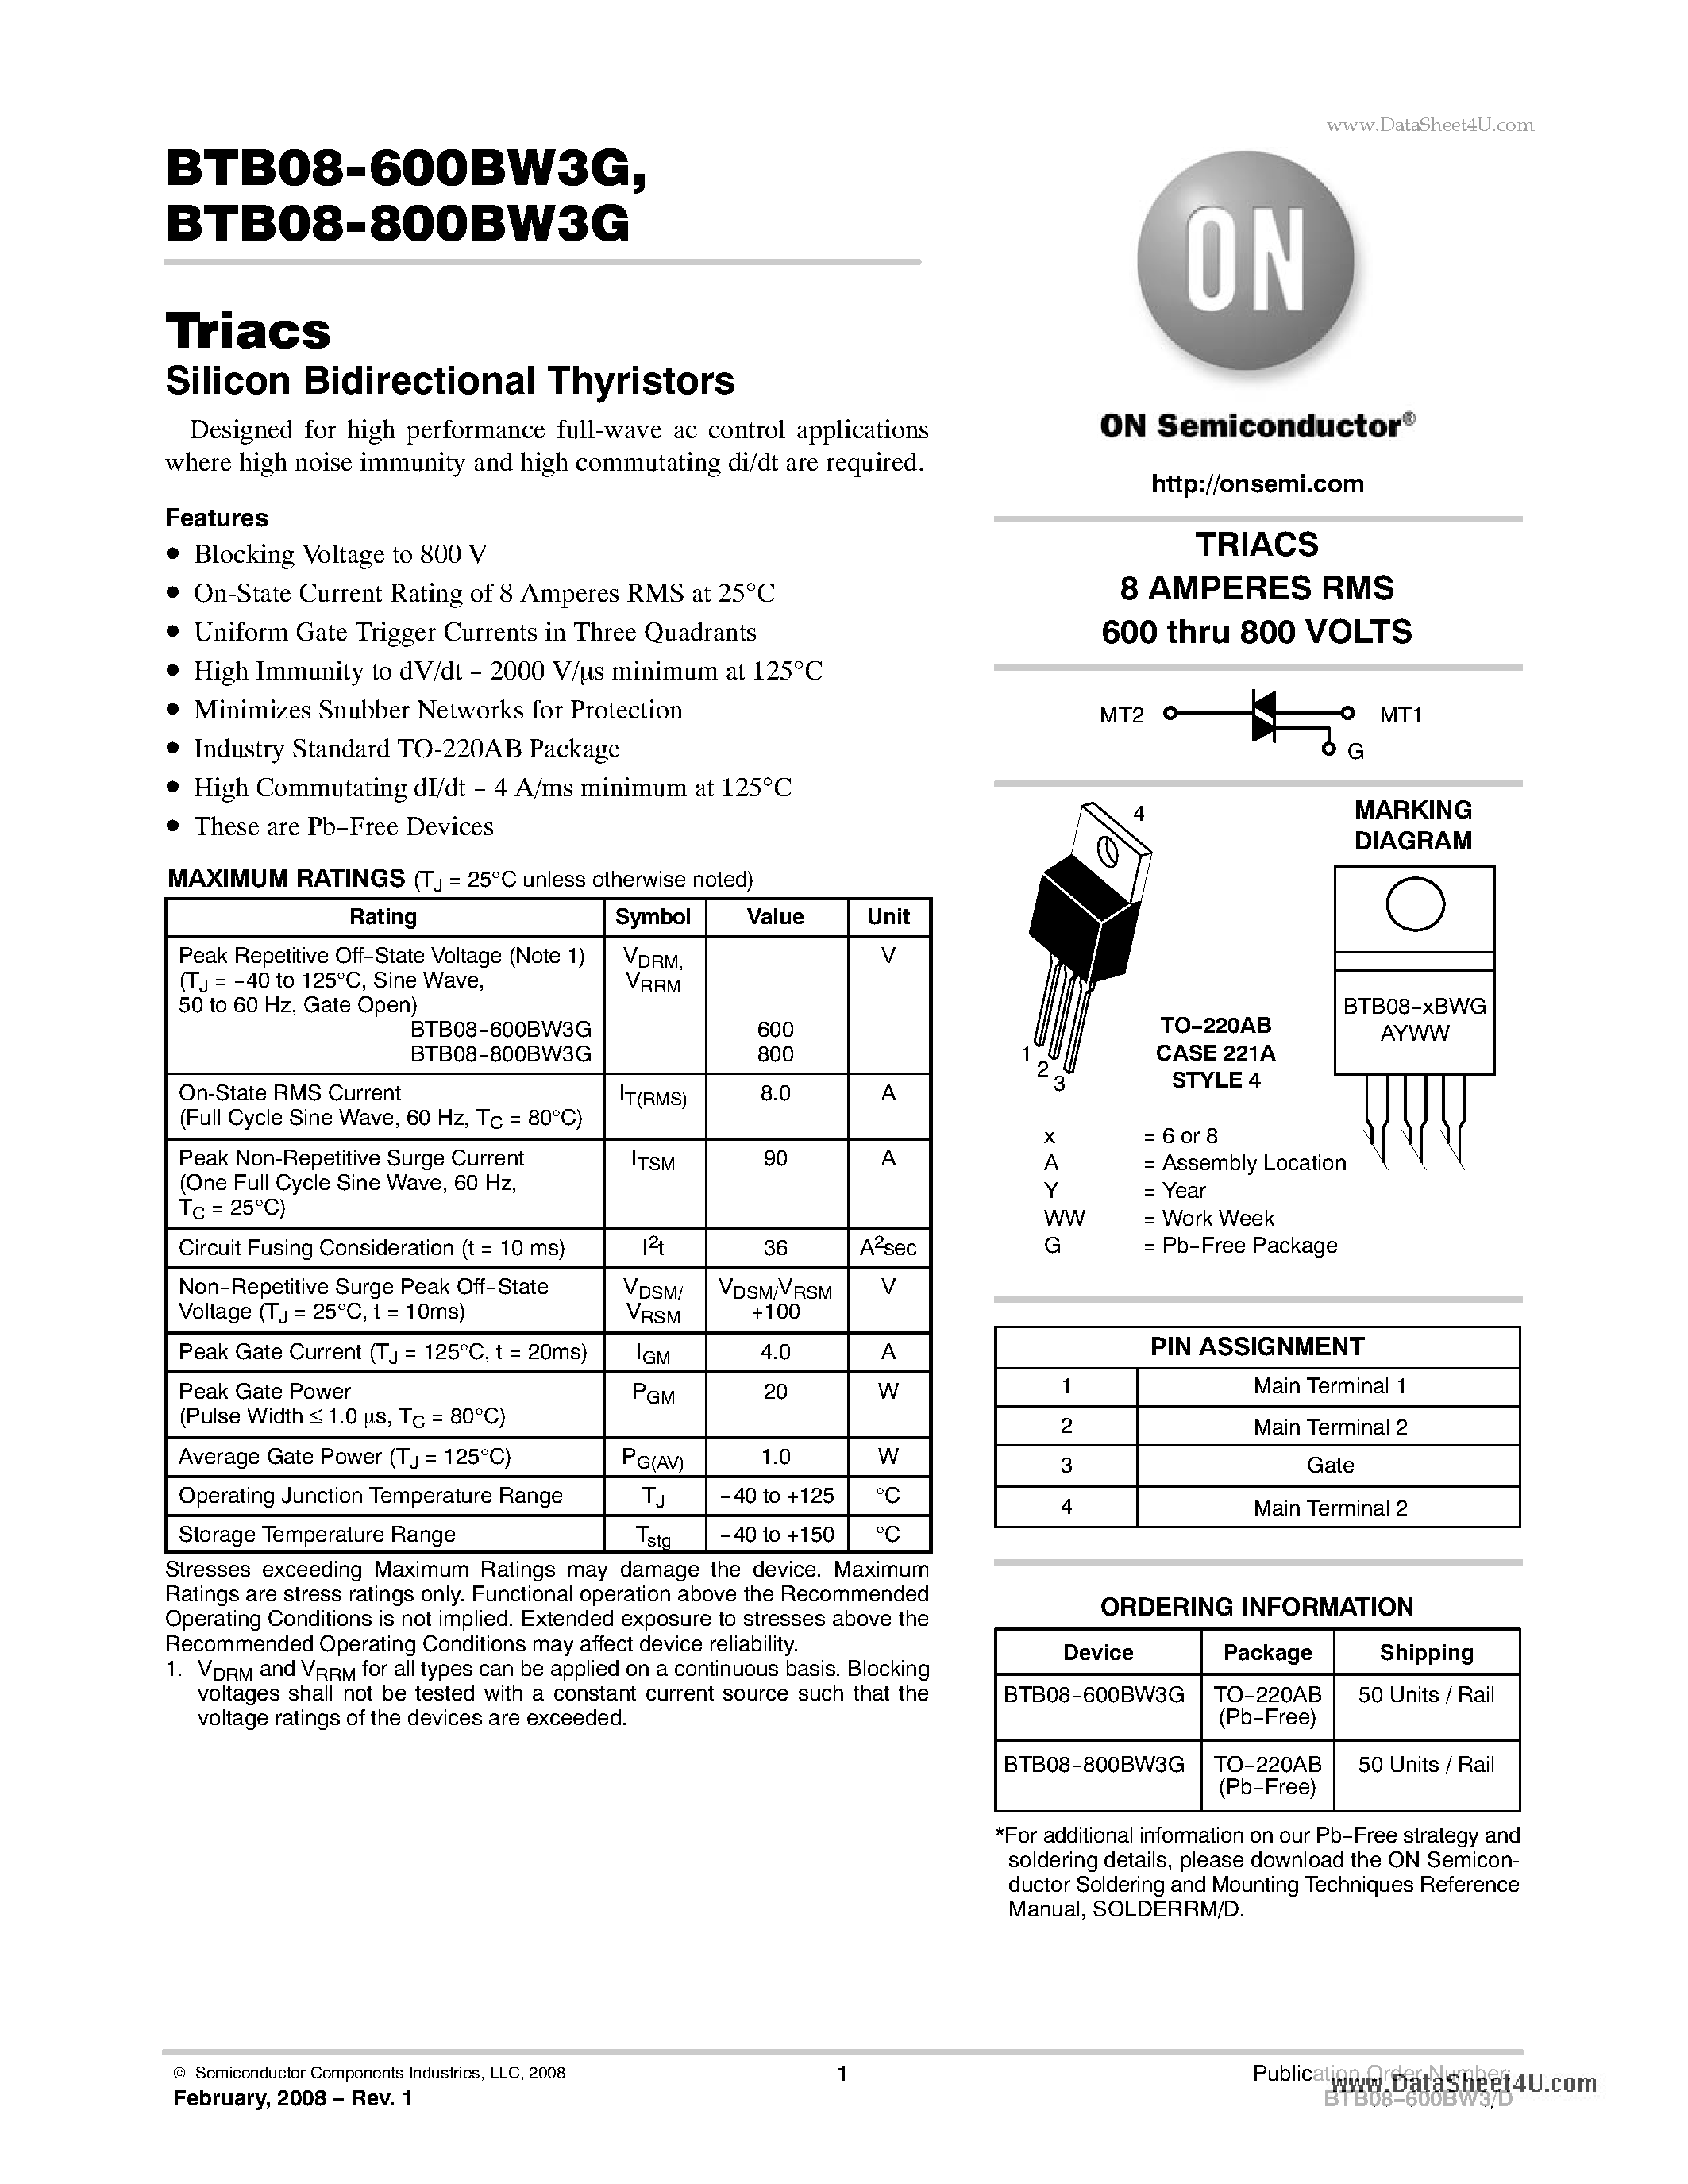 Datasheet BTB08-600BW3G - Triacs Silicon Bidirectional Thyristors page 1